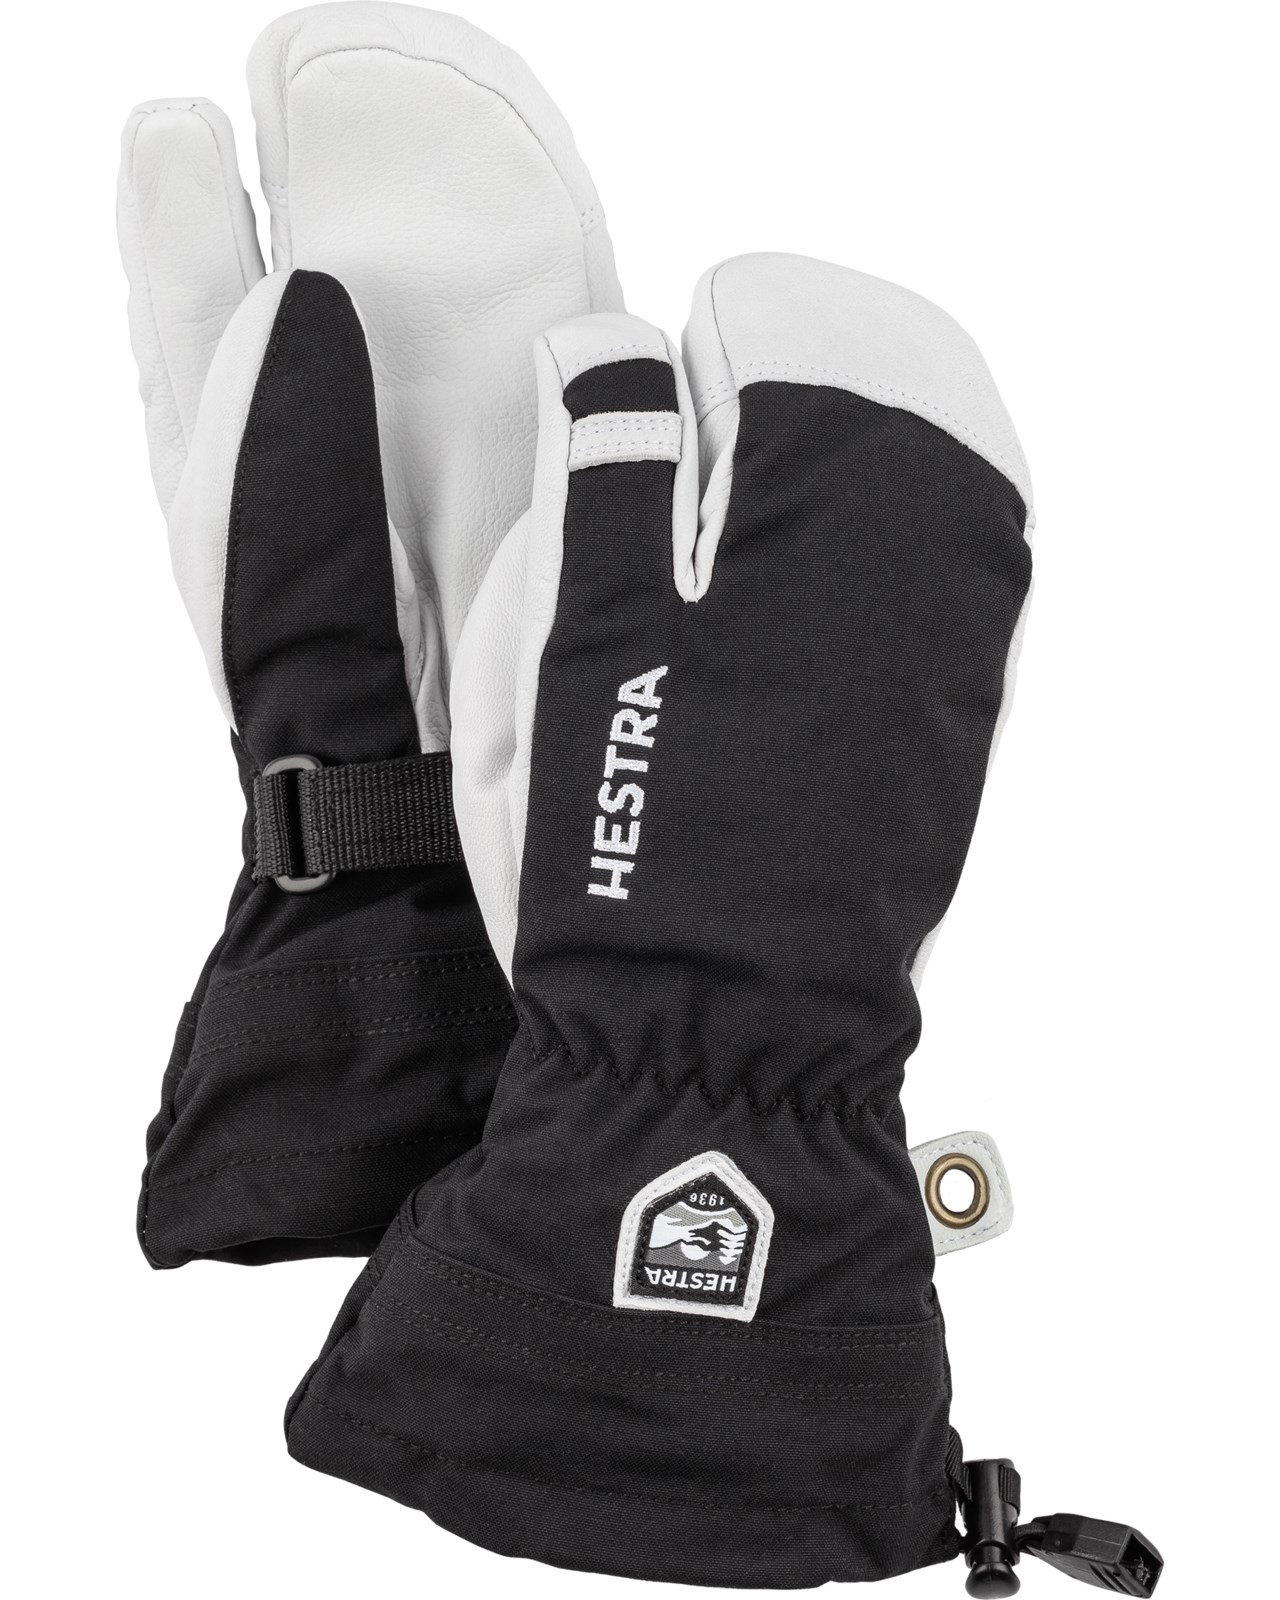 Hestra Leather Heli Ski JR - 3 Finger Black